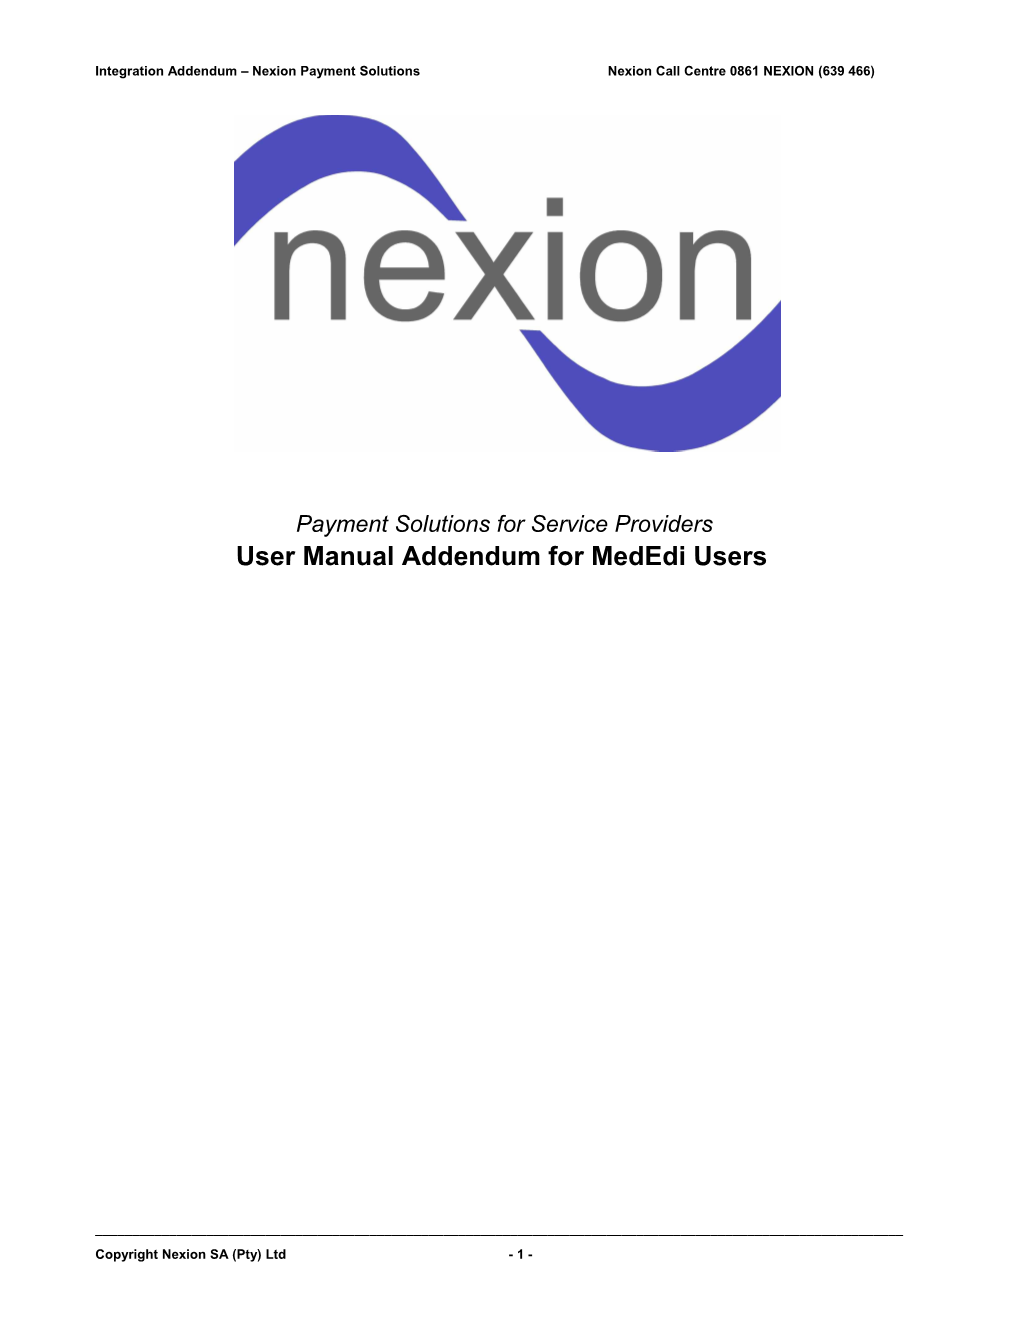 Final Intergration Appendix to the Nexion User Manual V2.5.1